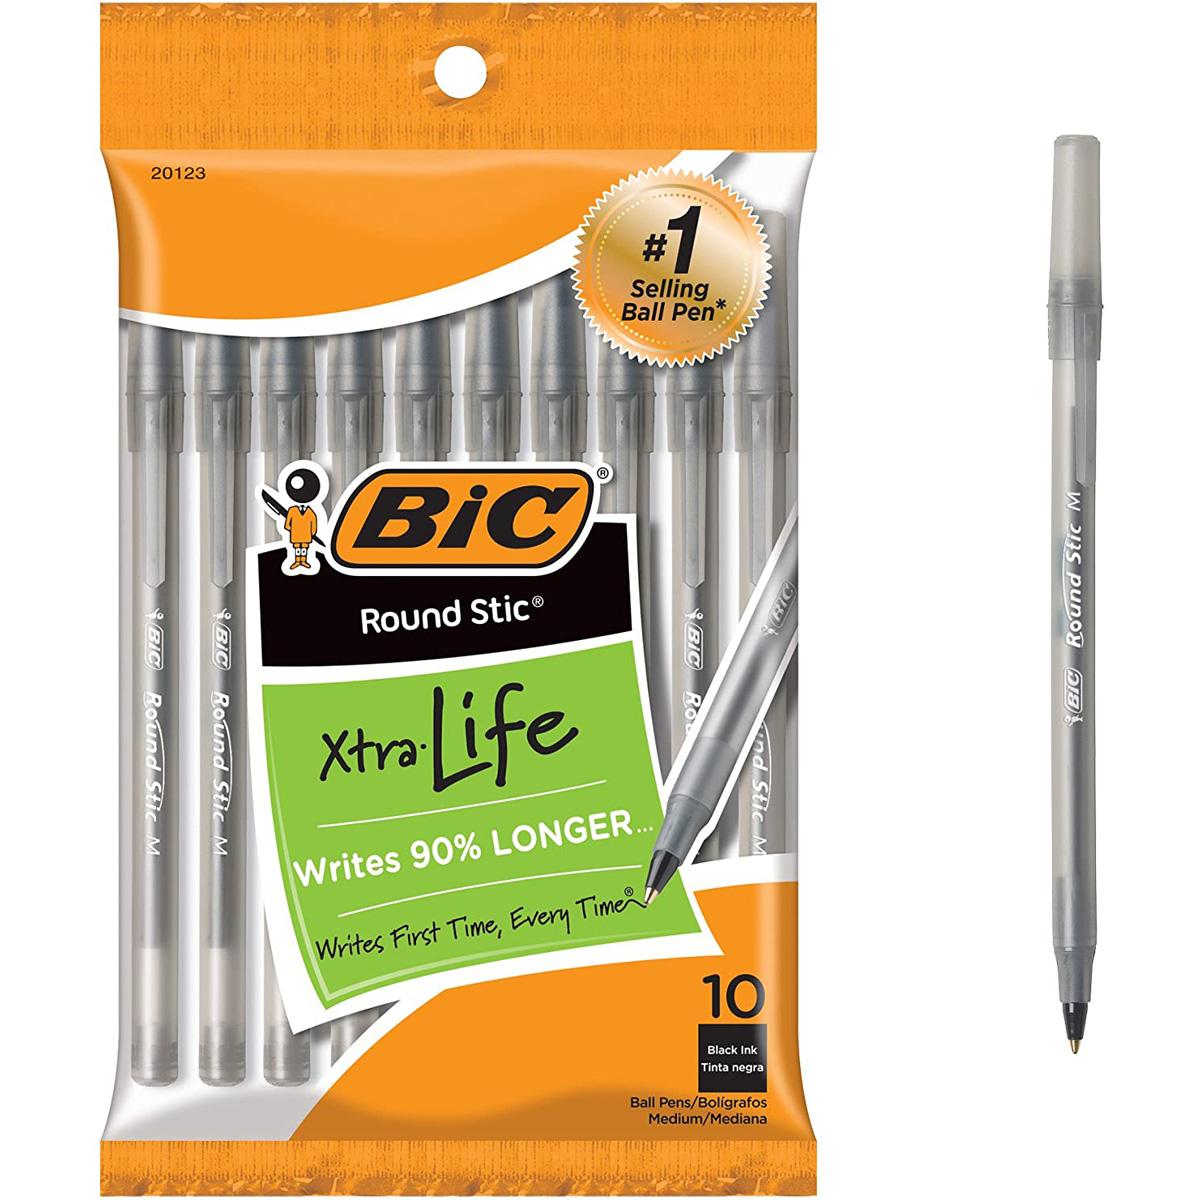 10 BIC Round Stic Xtra Life Medium Point Ballpoint Pens for $0.99